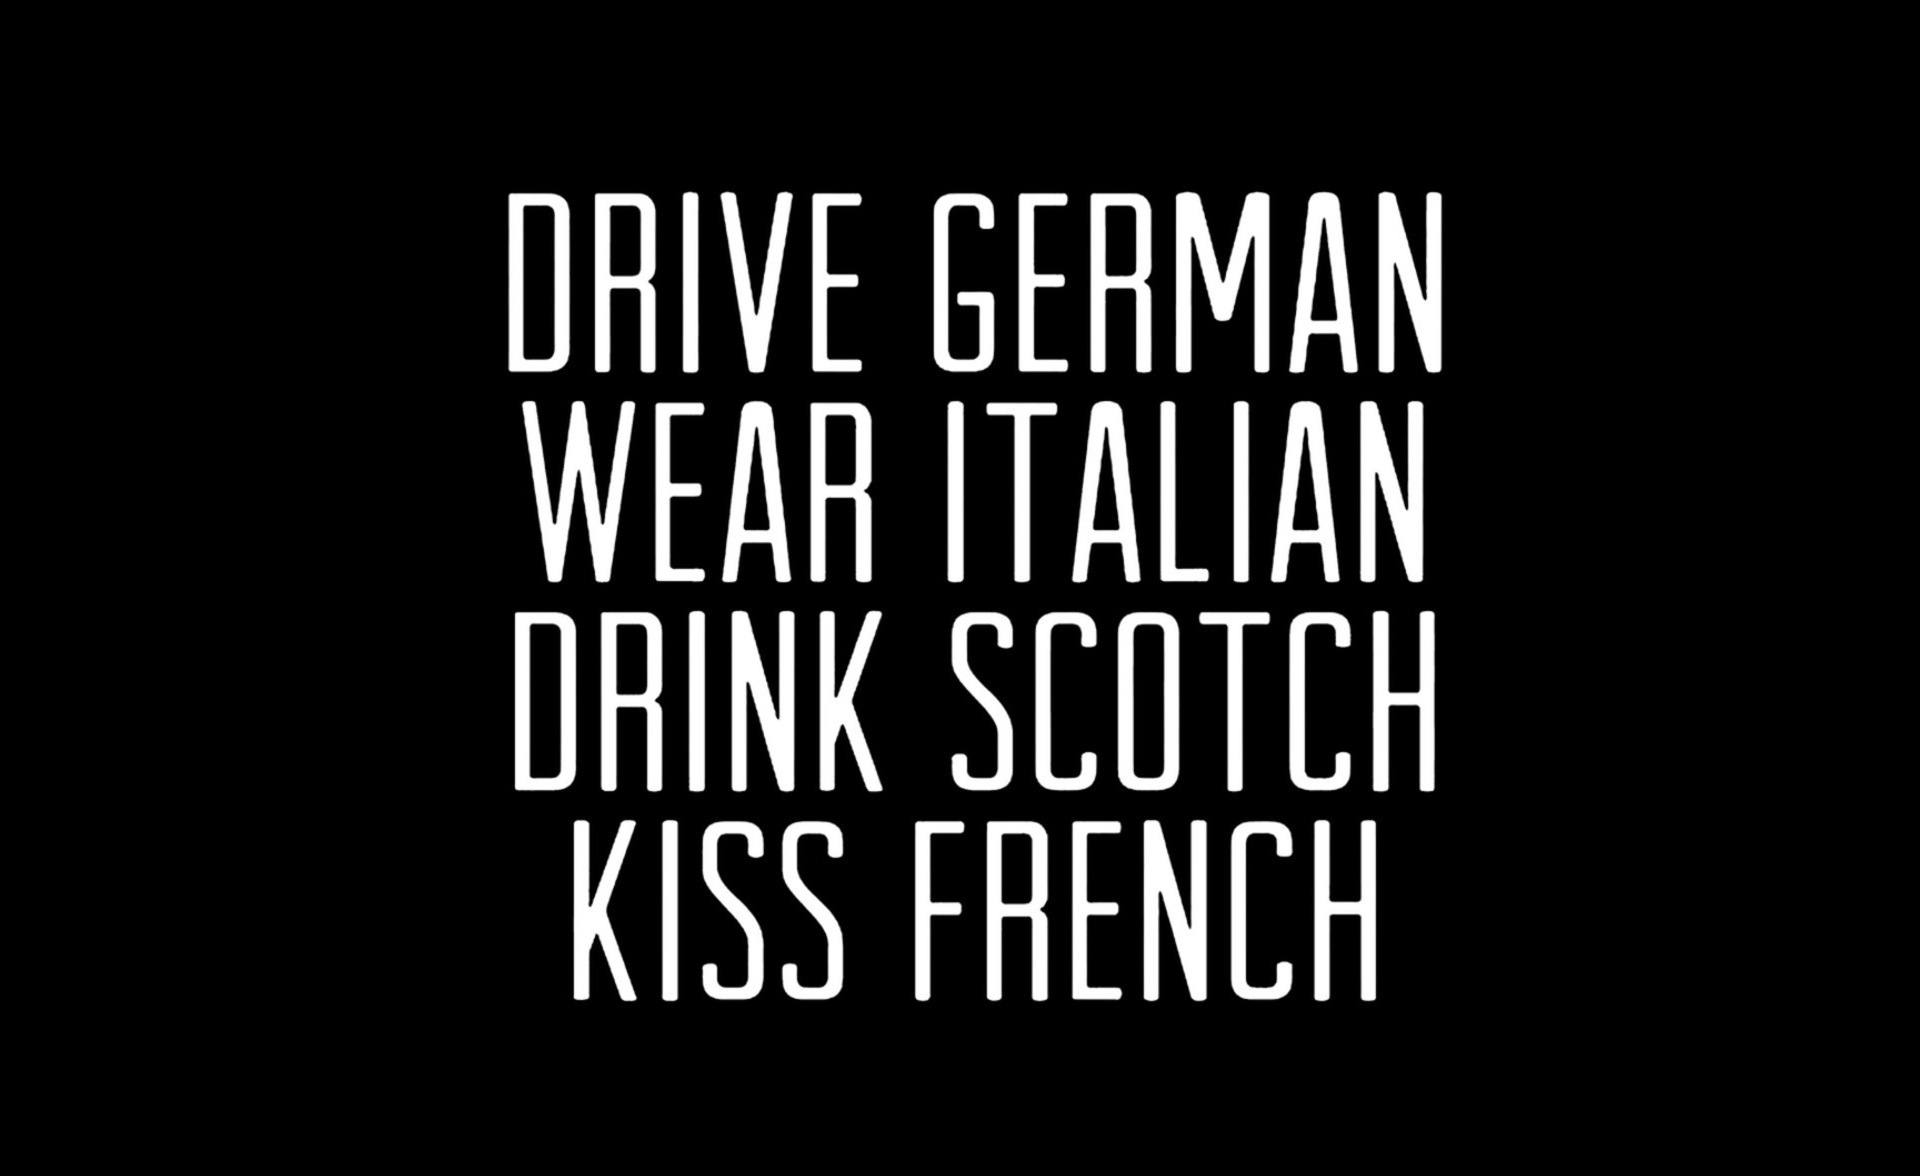 drive german wear italian drink scotch kiss french